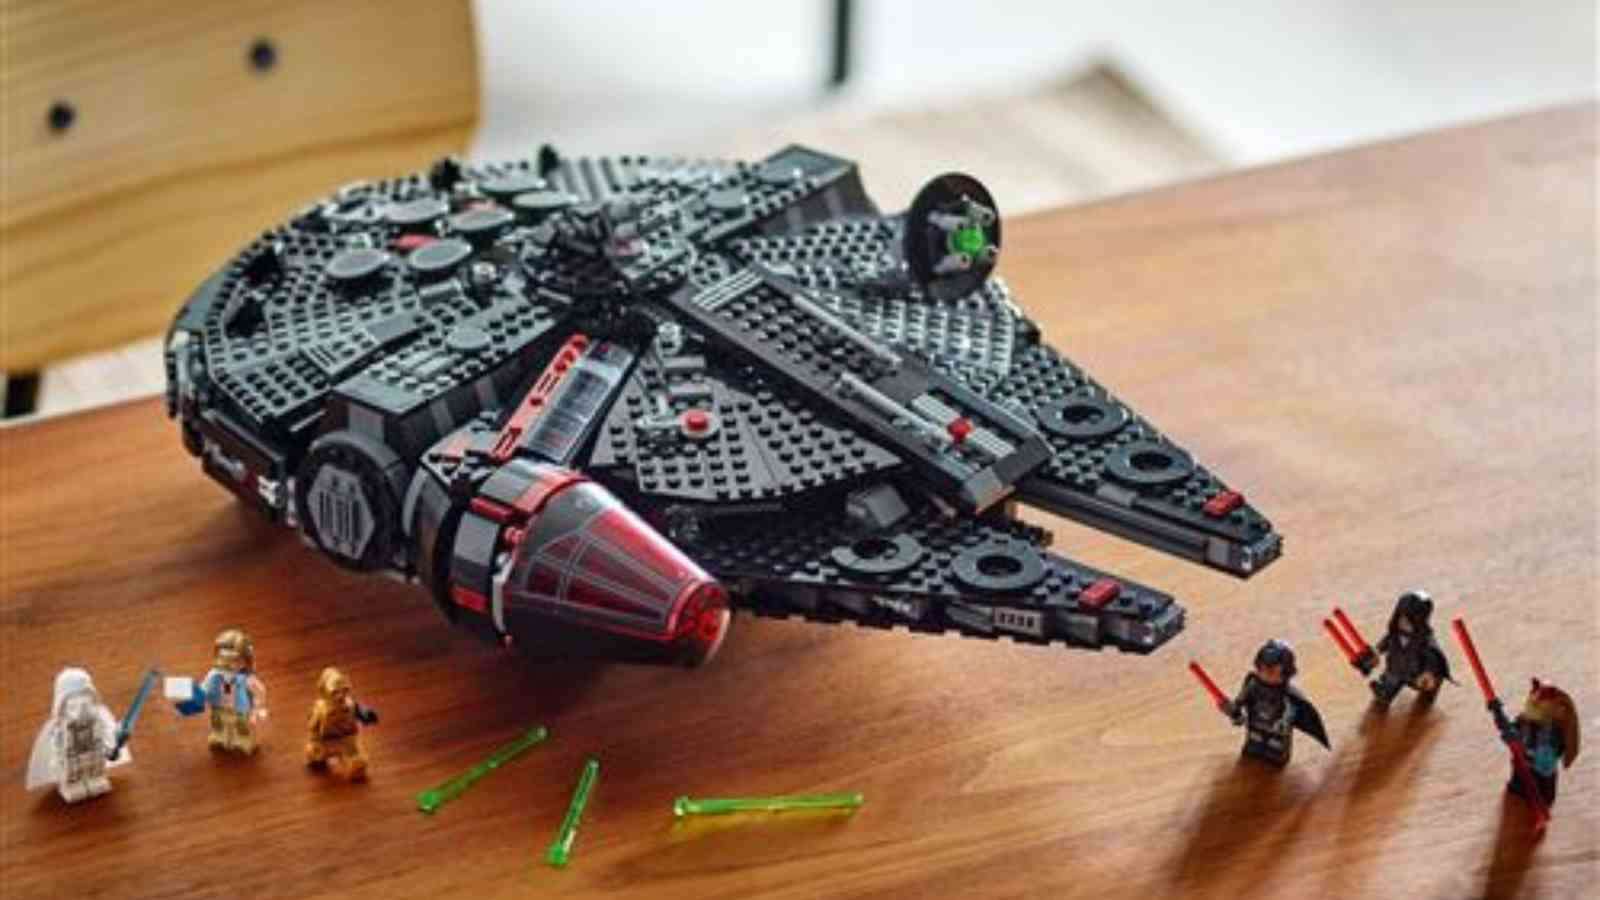 The LEGO Star Wars Rebuild the Galaxy The Dark Falcon on display